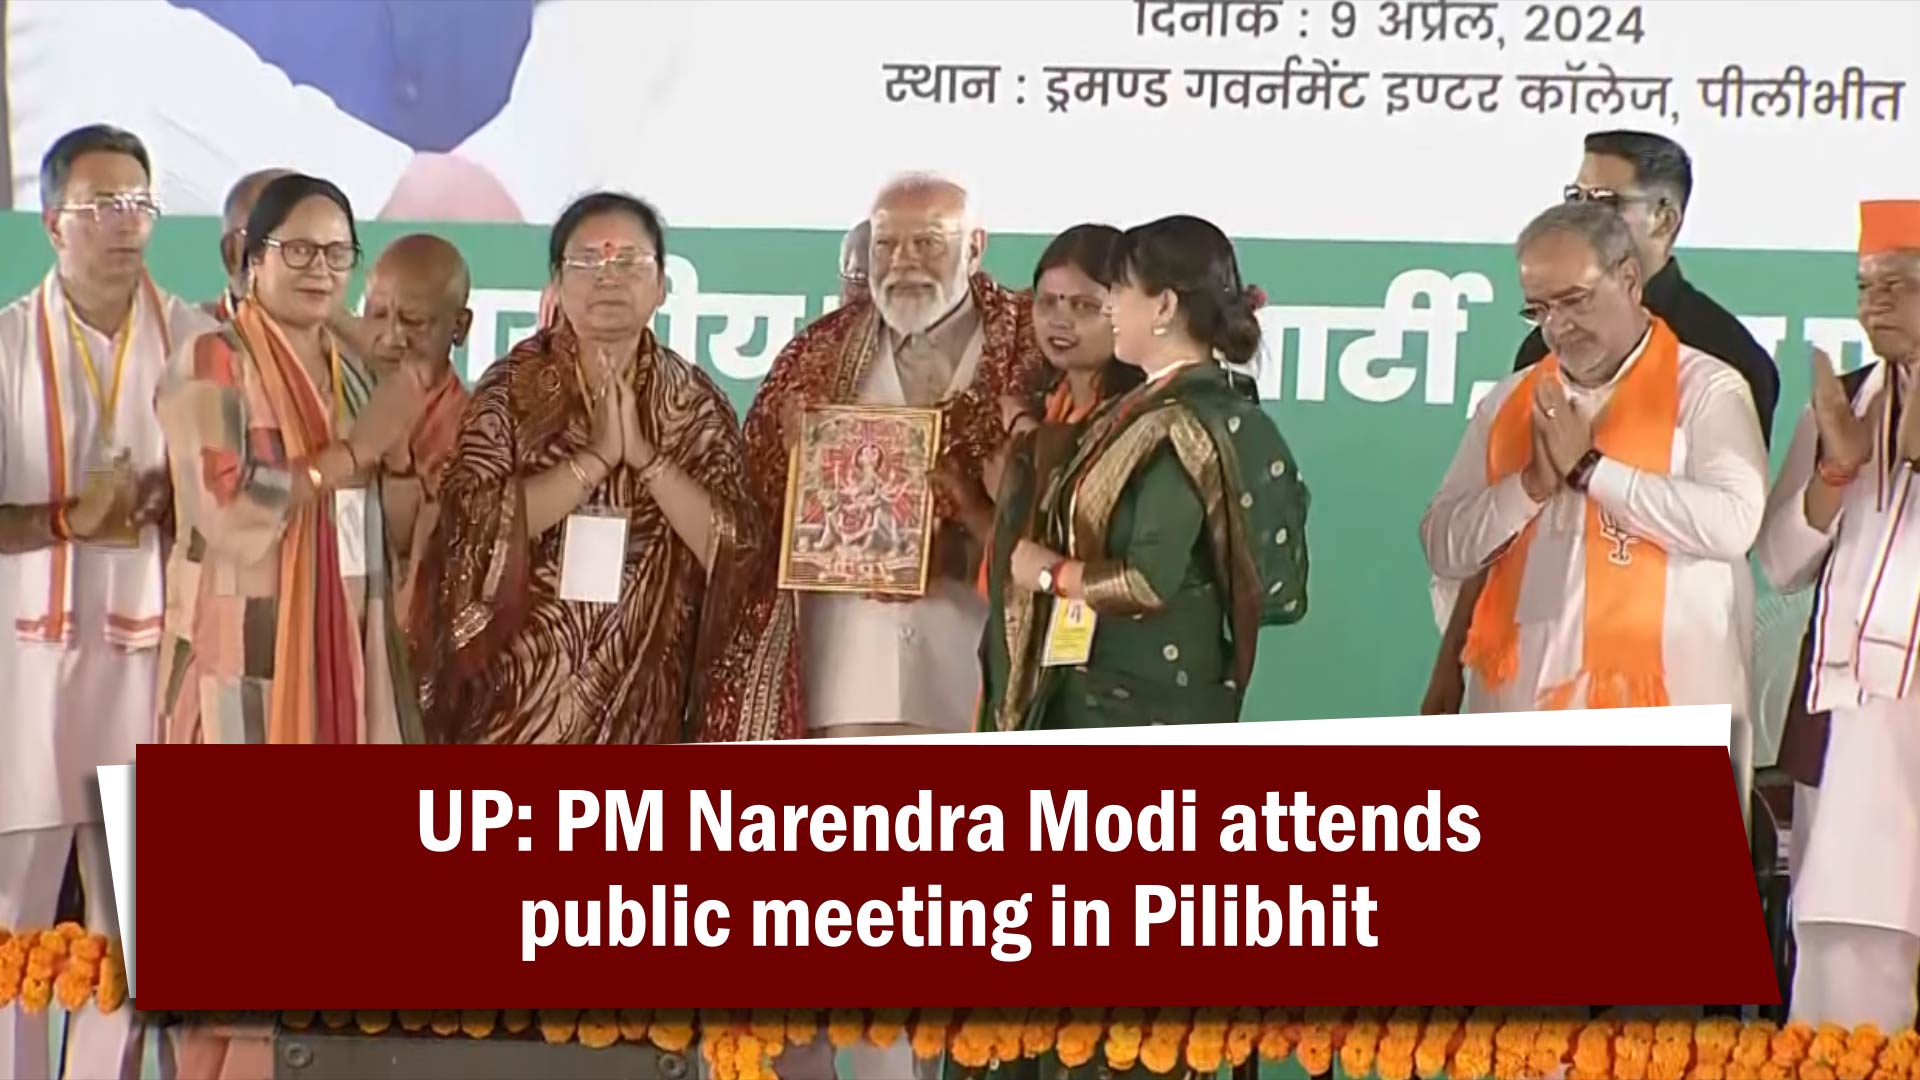 PM Narendra Modi attends public meeting in Pilibhit